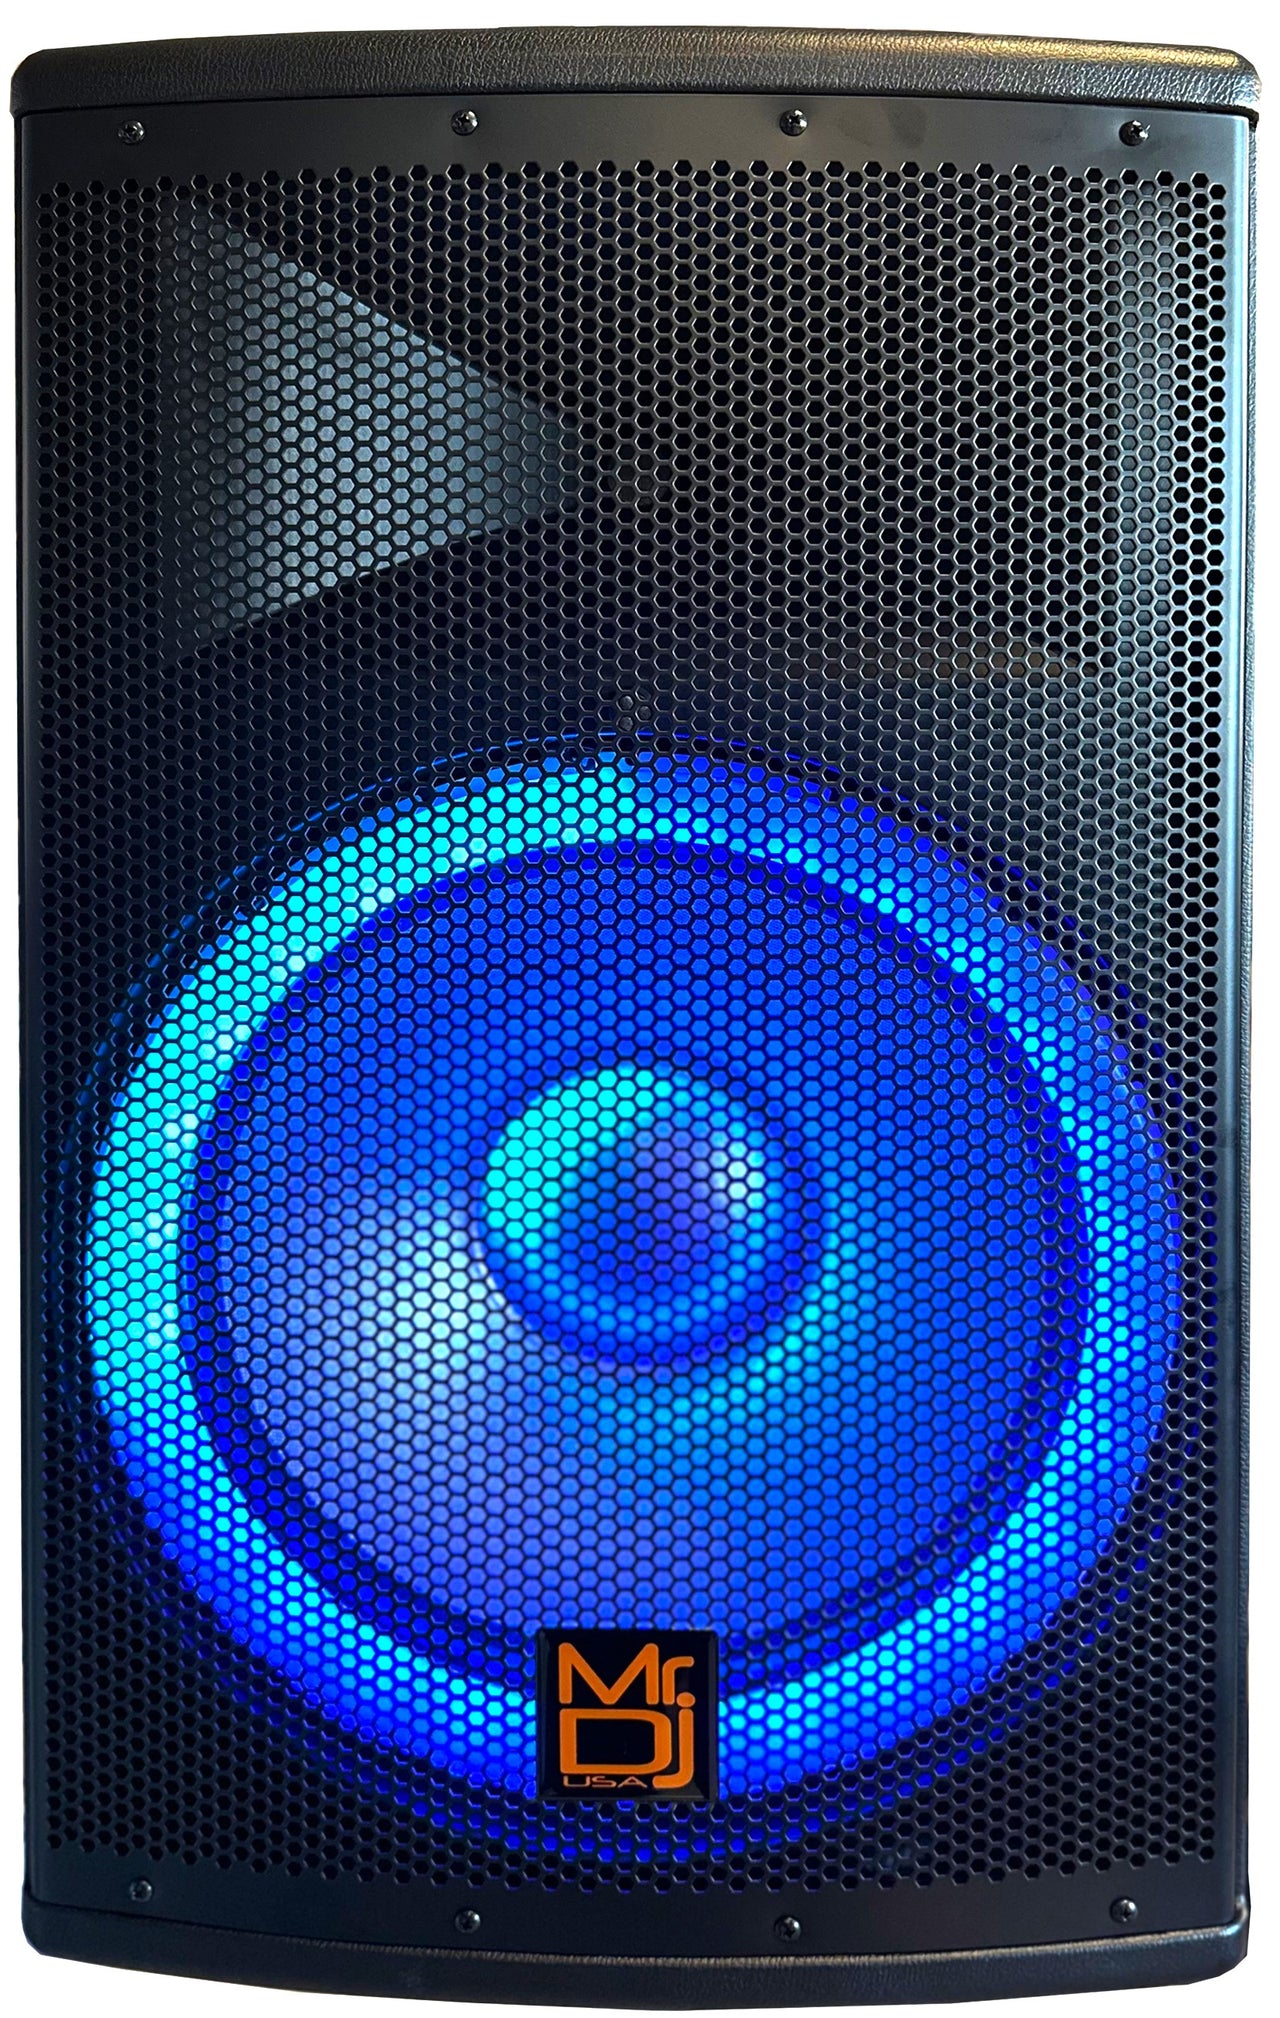 MR DJ PBX4500S 15" 2-Way PA DJ 4500W Passive Speaker LED Lighting + Speaker Stand & Cable